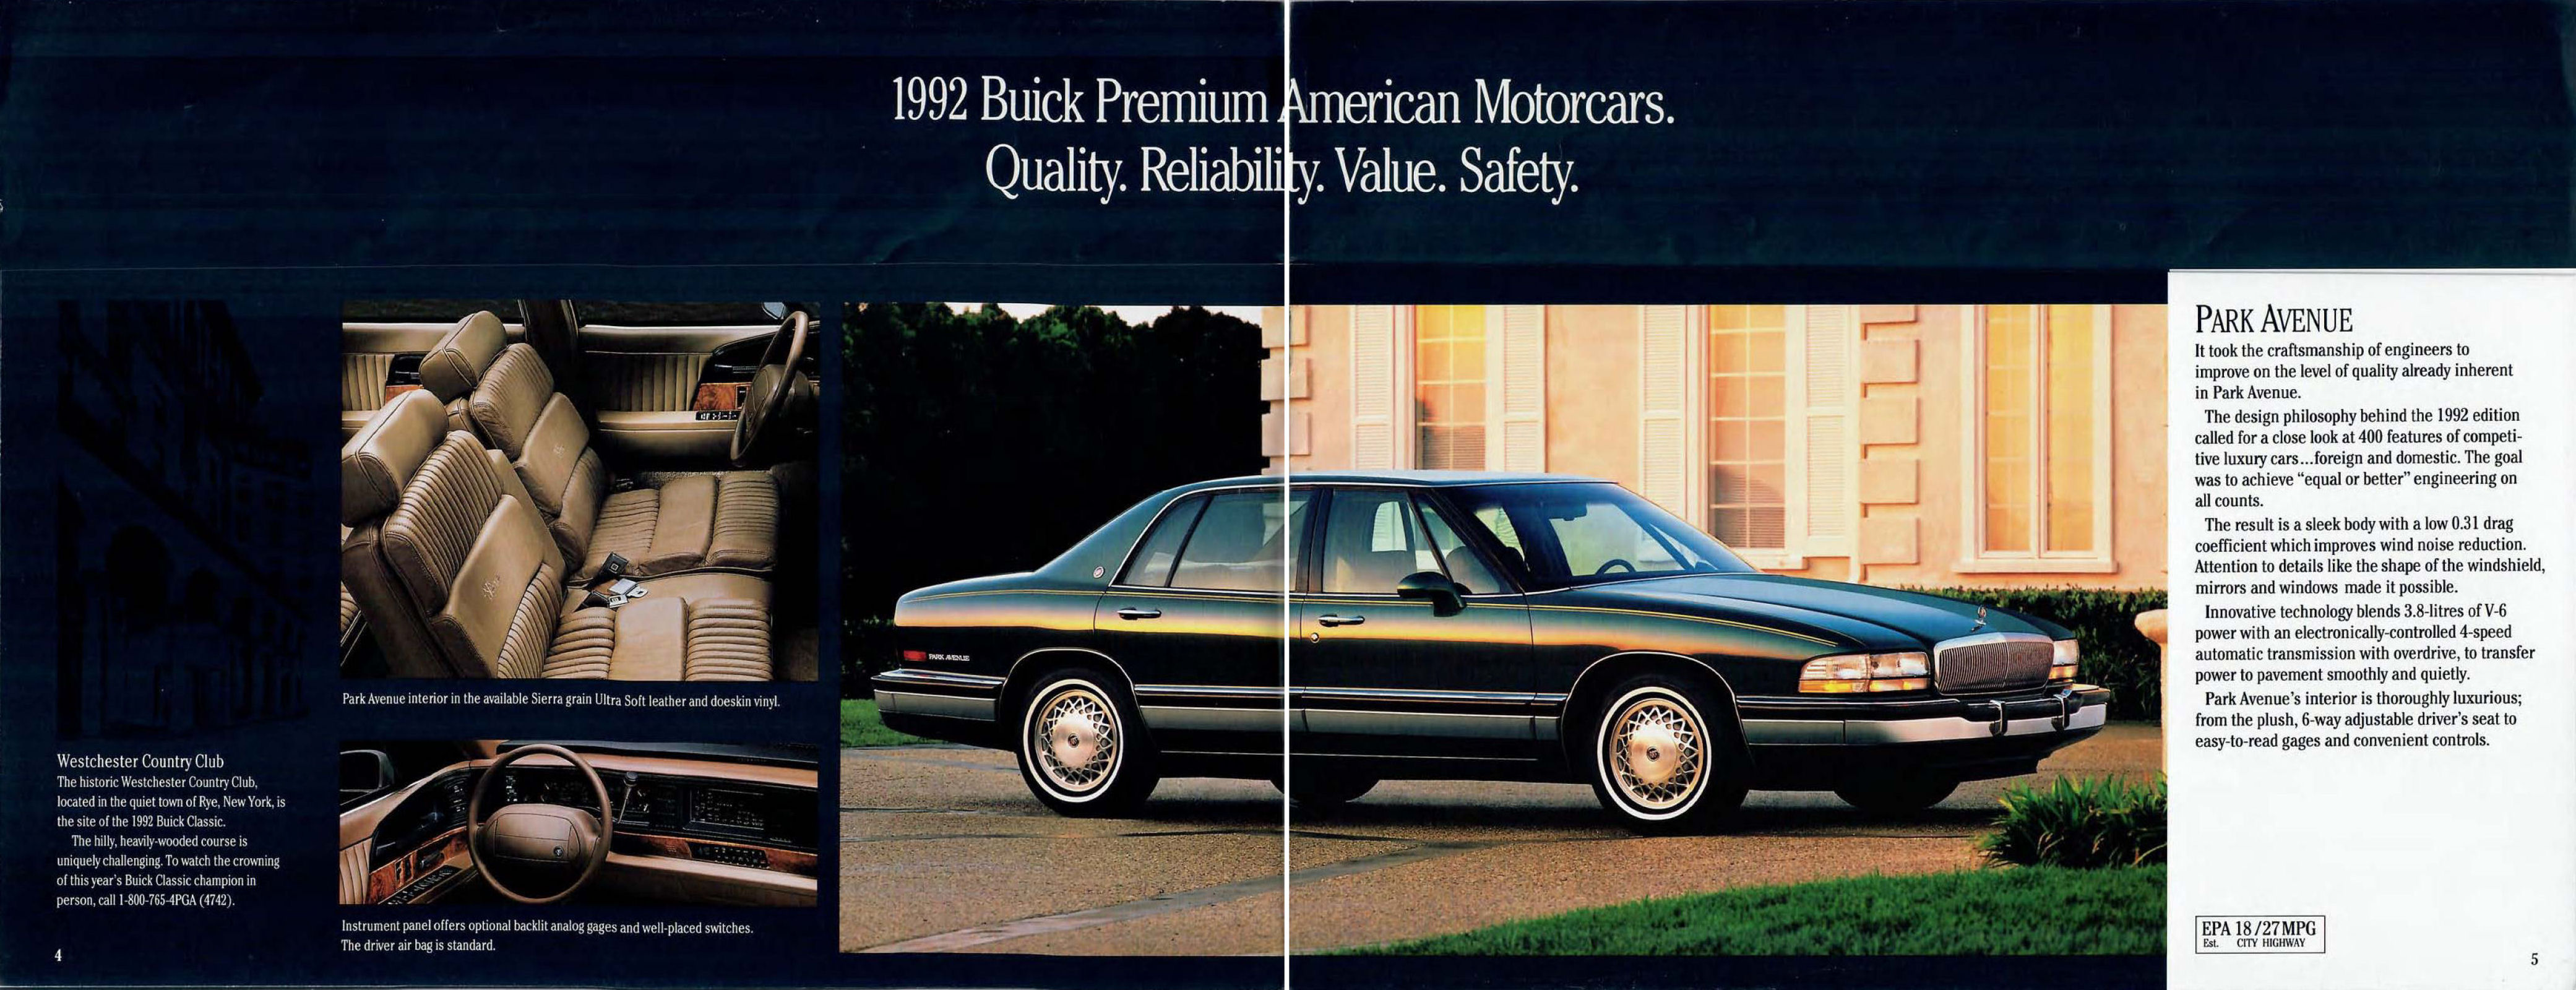 1992 Buick Full Line Handout-04-05